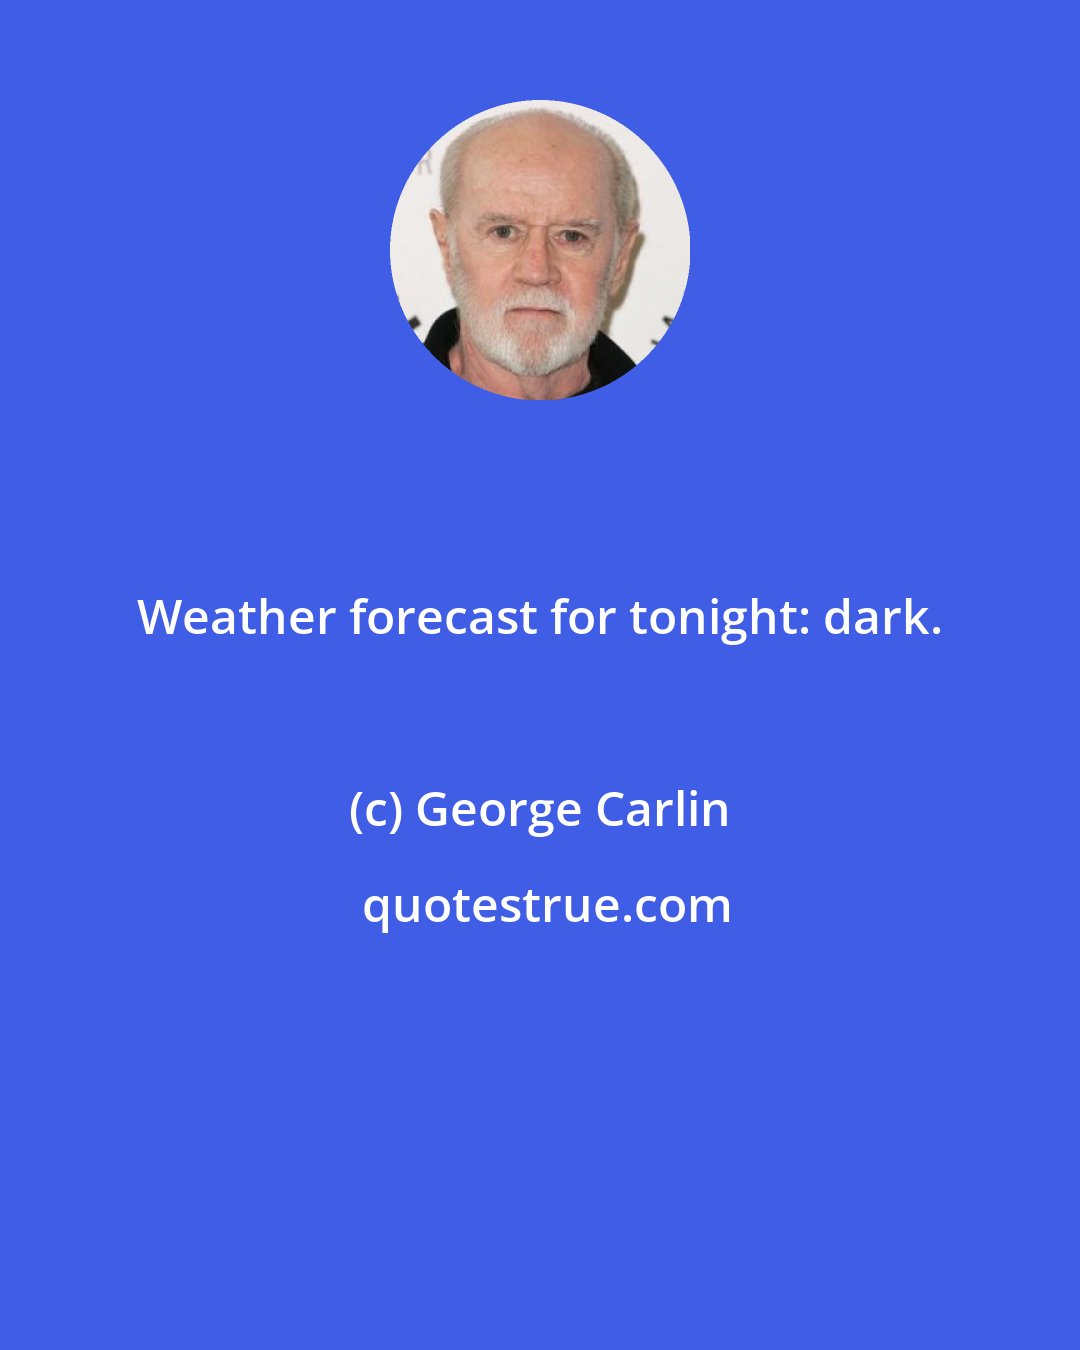 George Carlin: Weather forecast for tonight: dark.